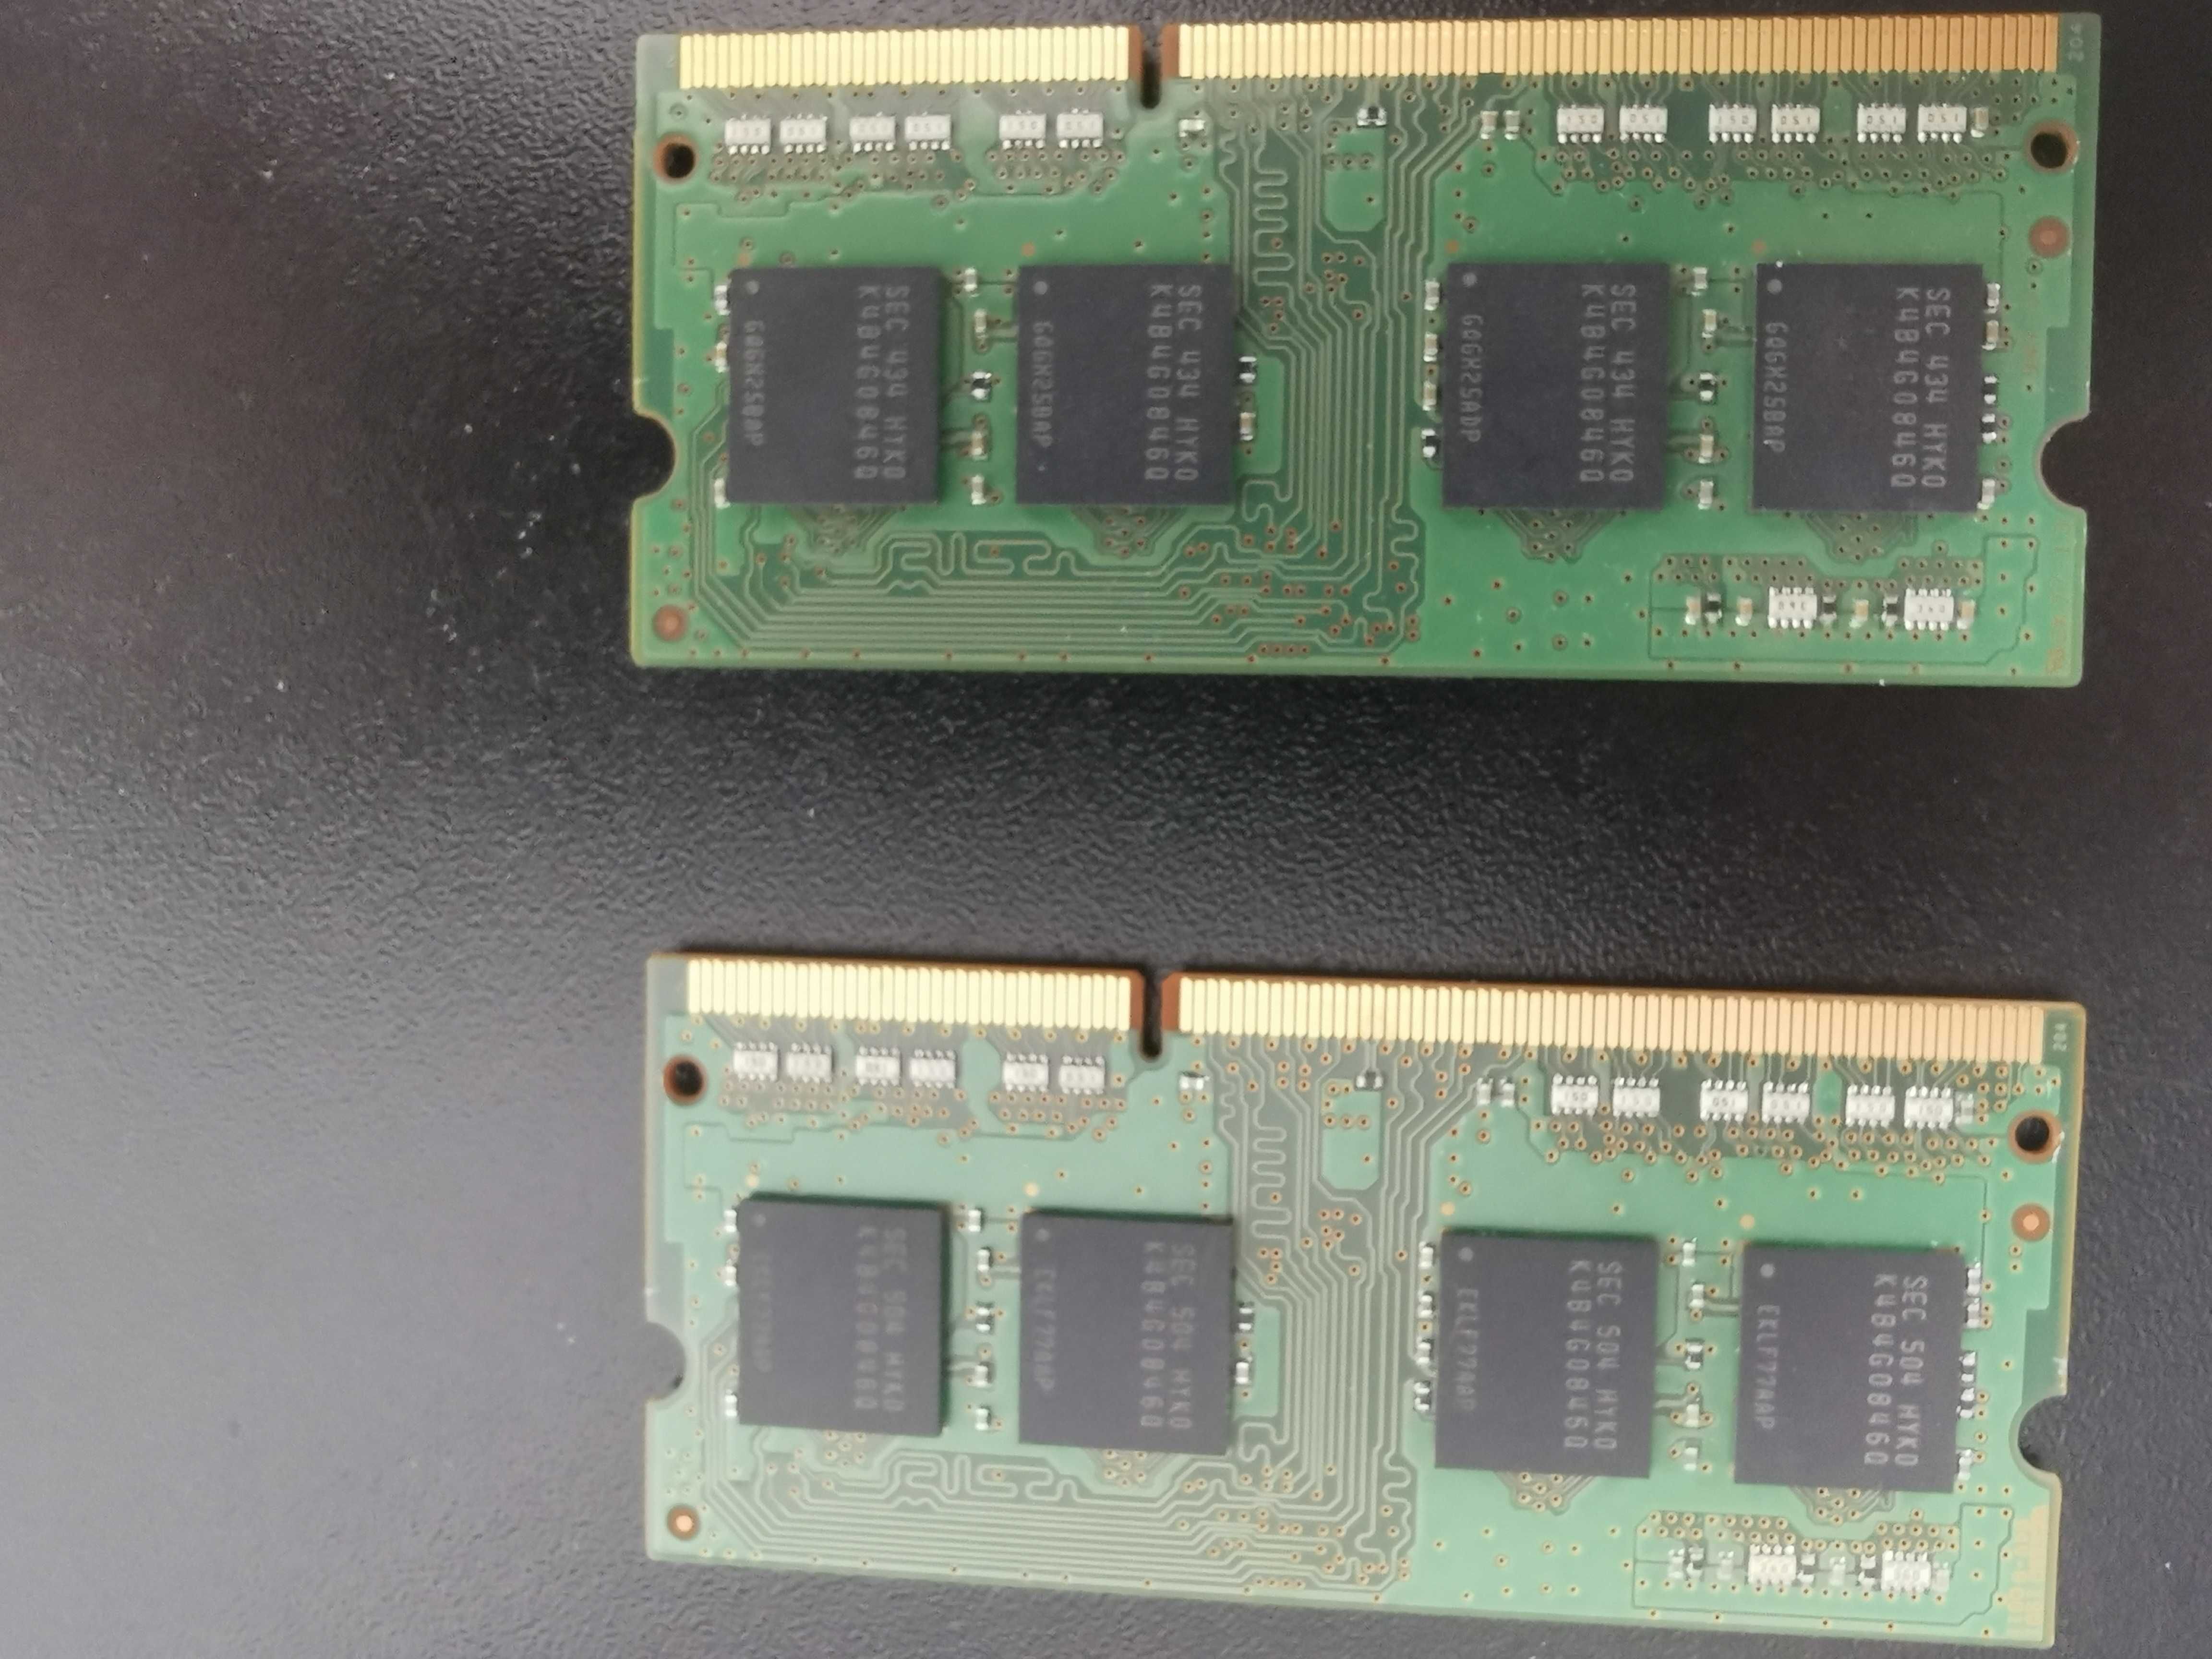 Samsung Laptop Memory 4GB 1Rx8PC3L-12800S-11-13-B4 DDR3